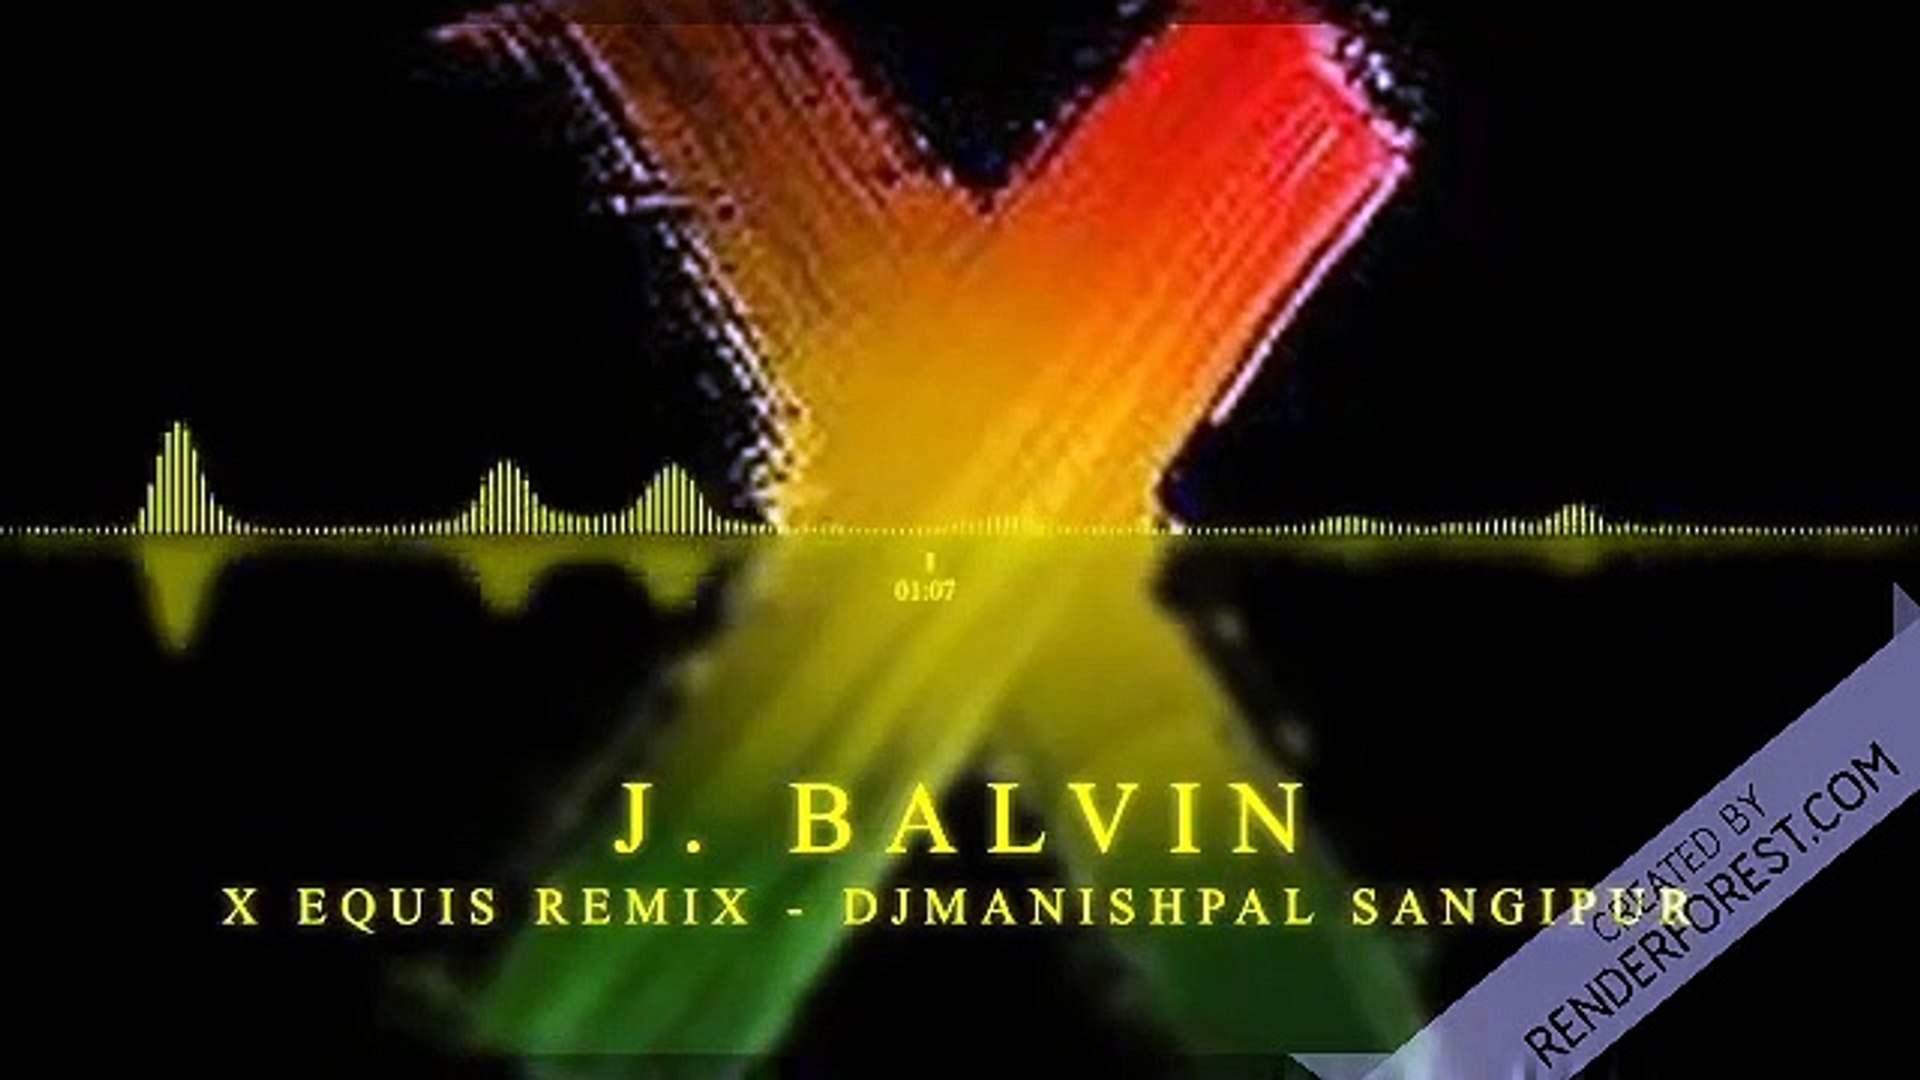 X EQUIS Remix -Nicky Jam - J. Balvin - spanish latin , New DJ song DANCE  2018 - YouTube - video Dailymotion